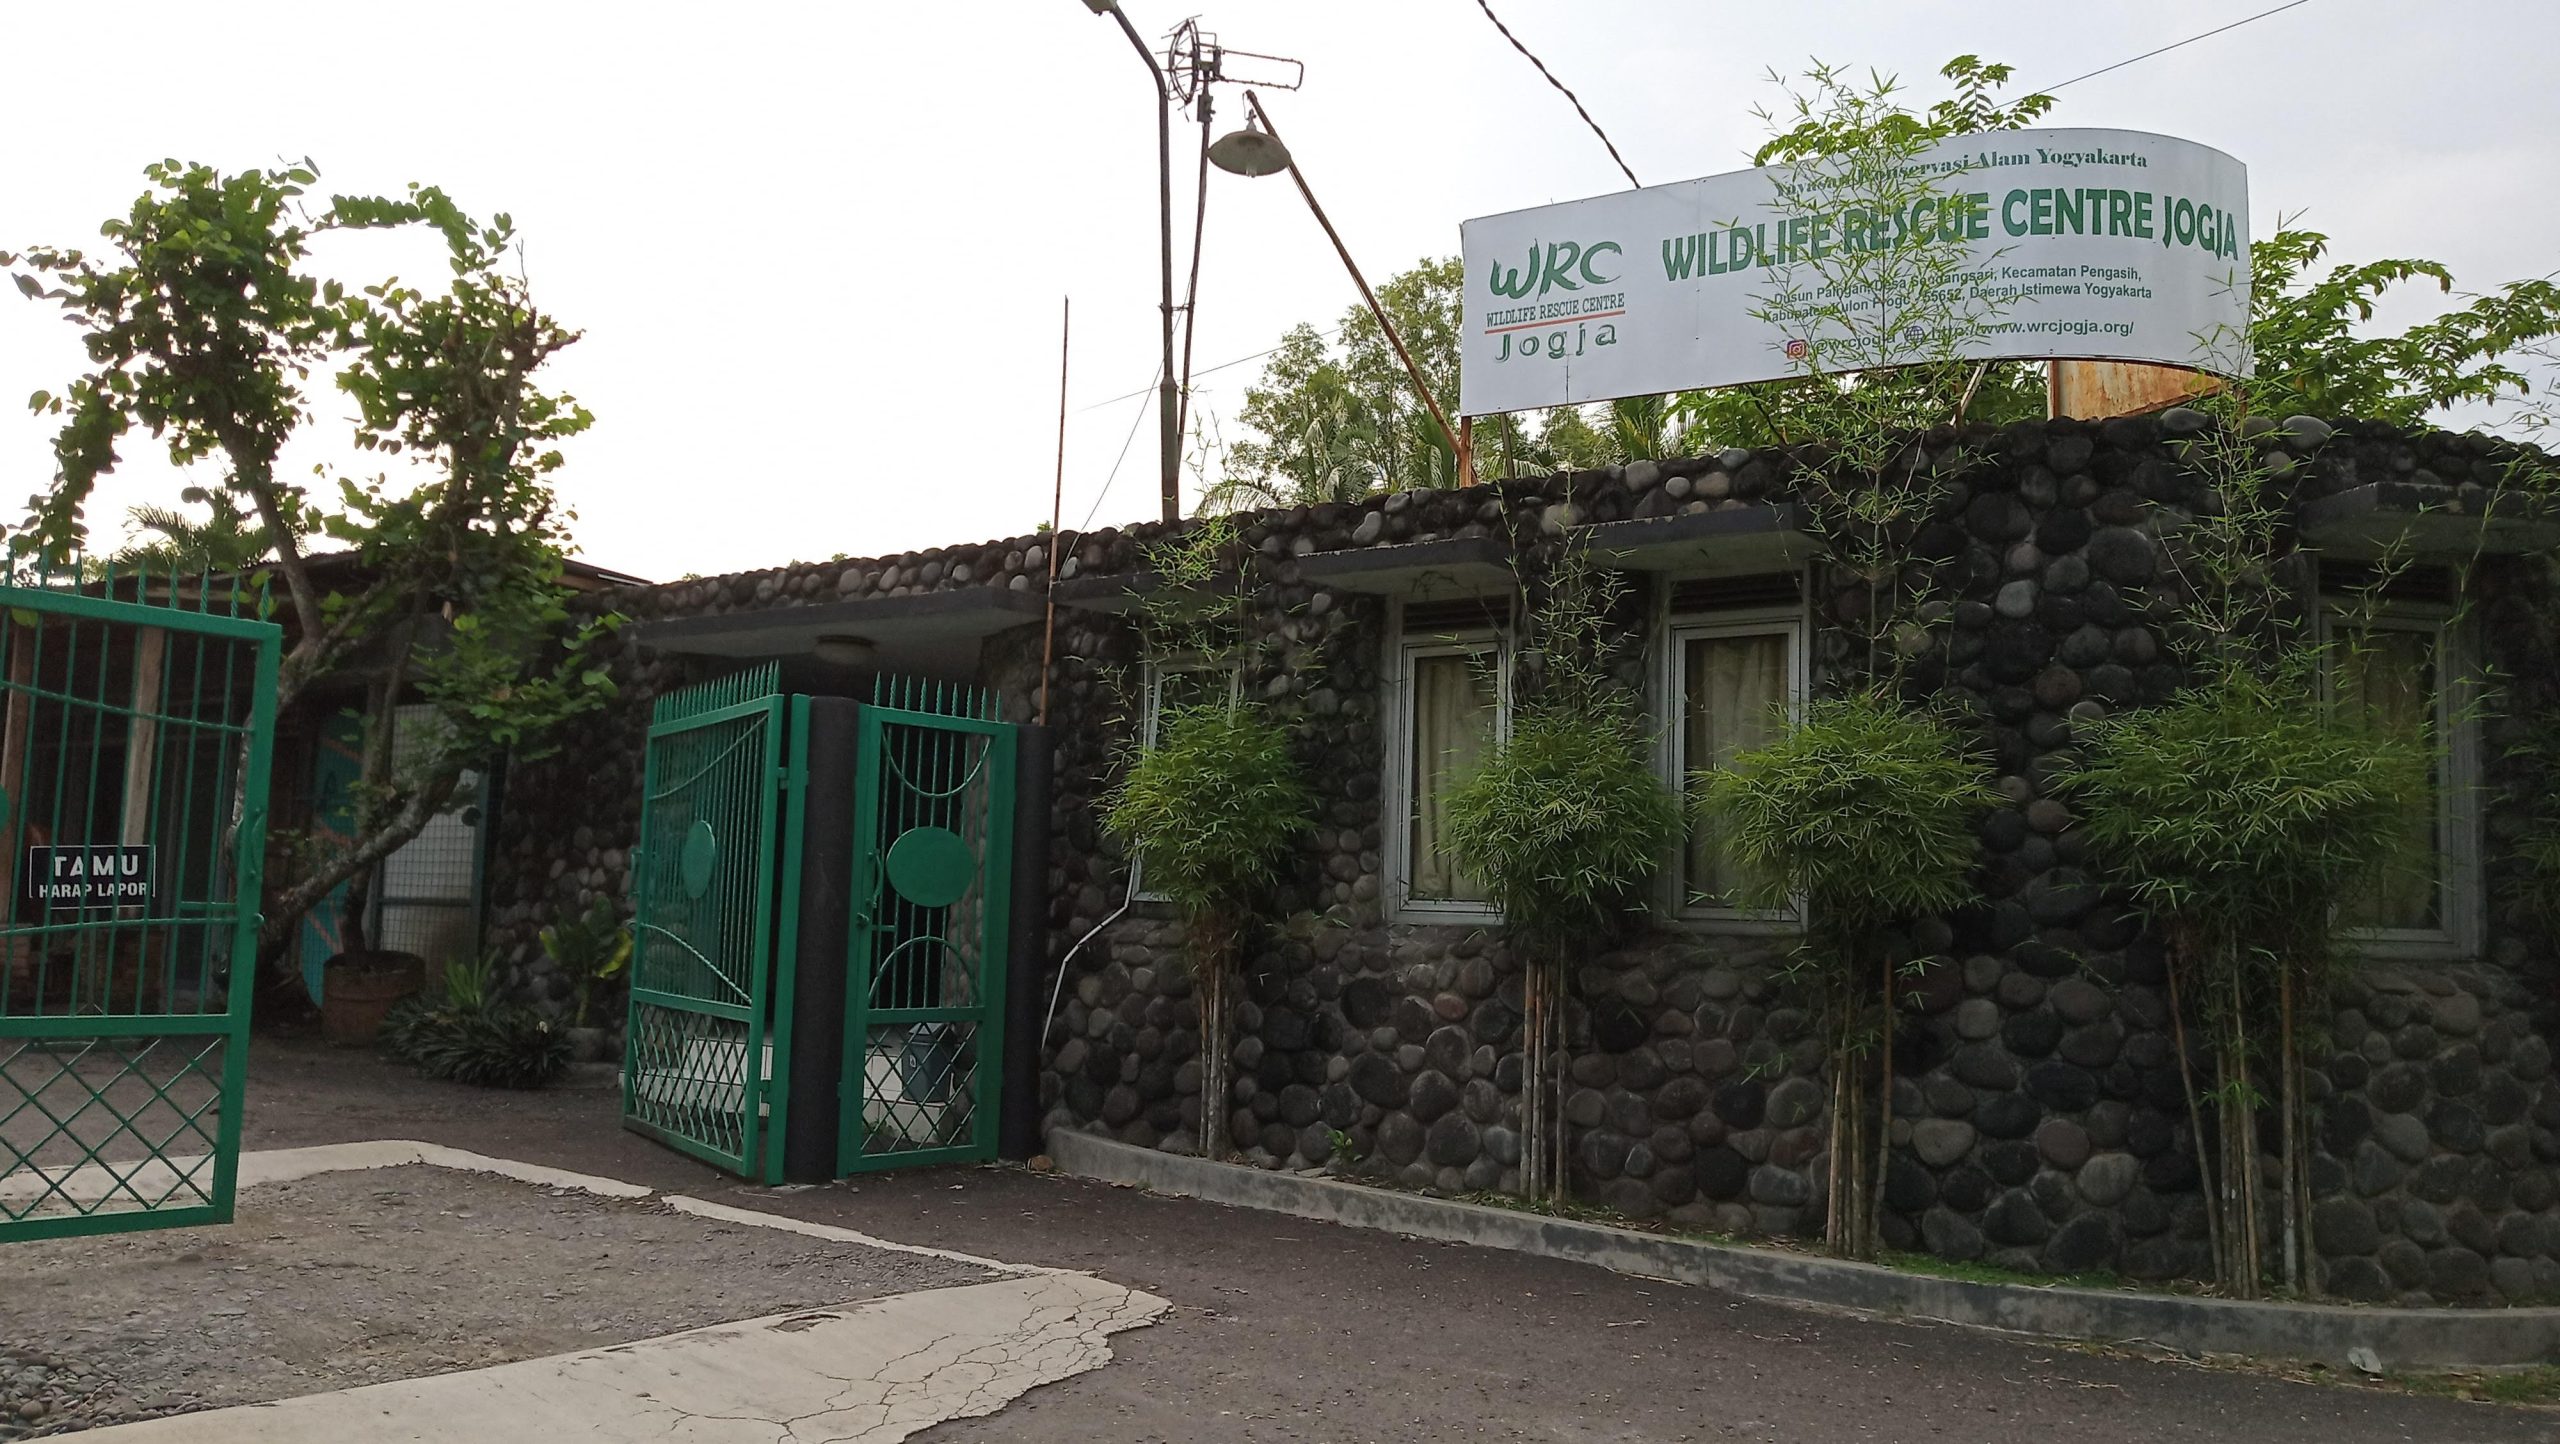 Wildlife Rescue Centre Yogyakarta, Sumber: twimg.com